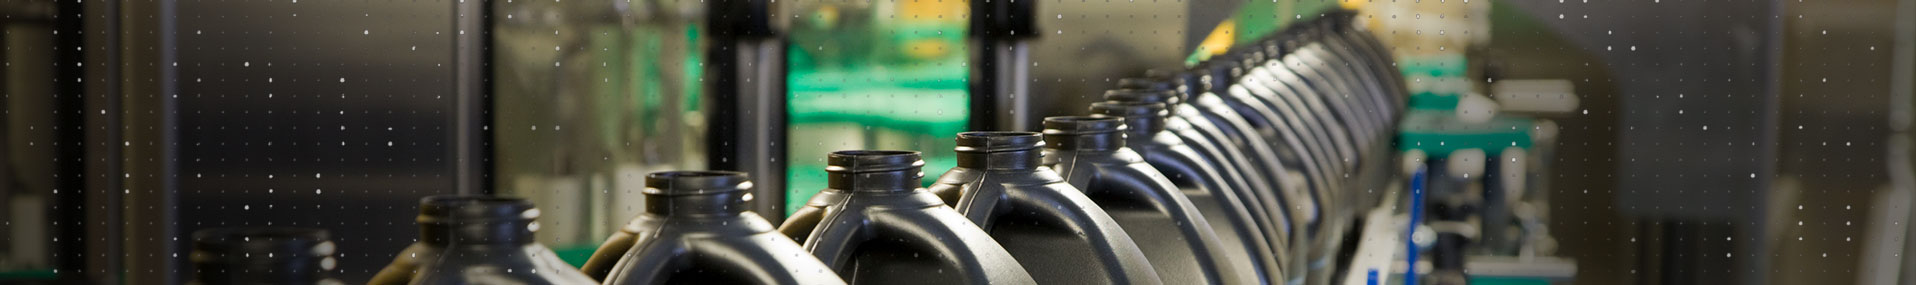 Consumer Product bottles on conveyor belt